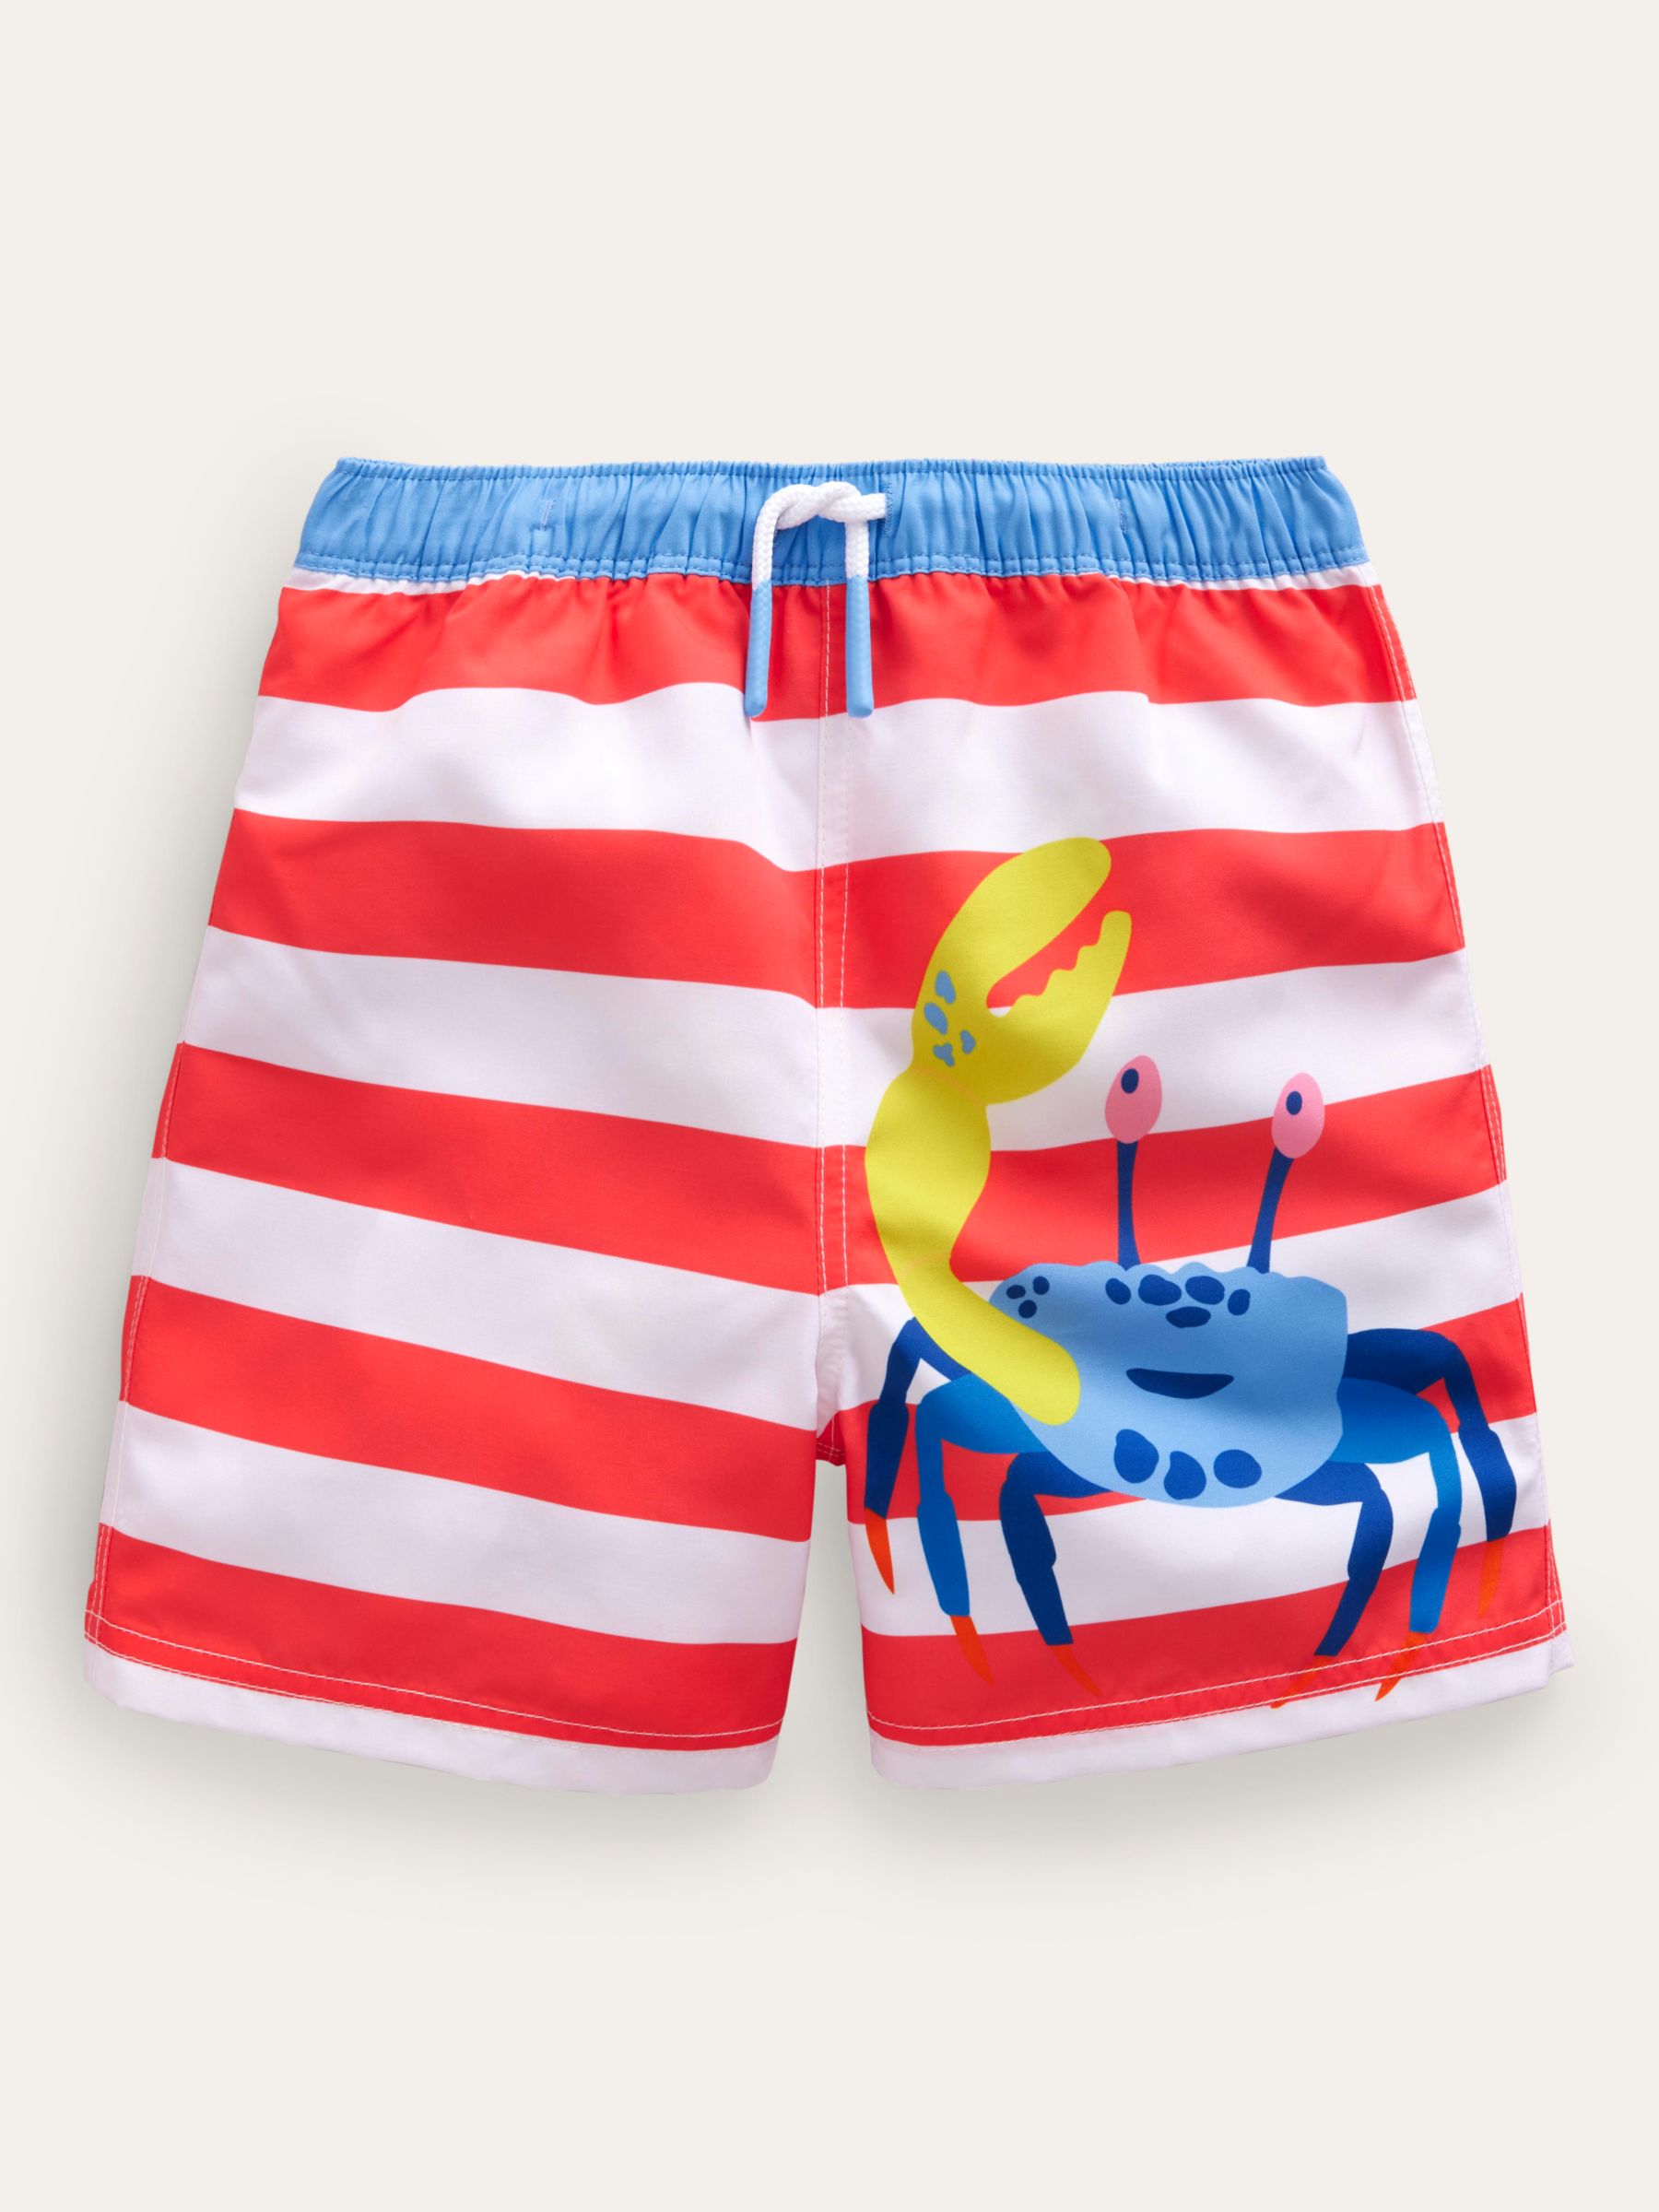 Mini Boden Kids' Crab Stripe Swim Shorts, Red/White, 3-4 years